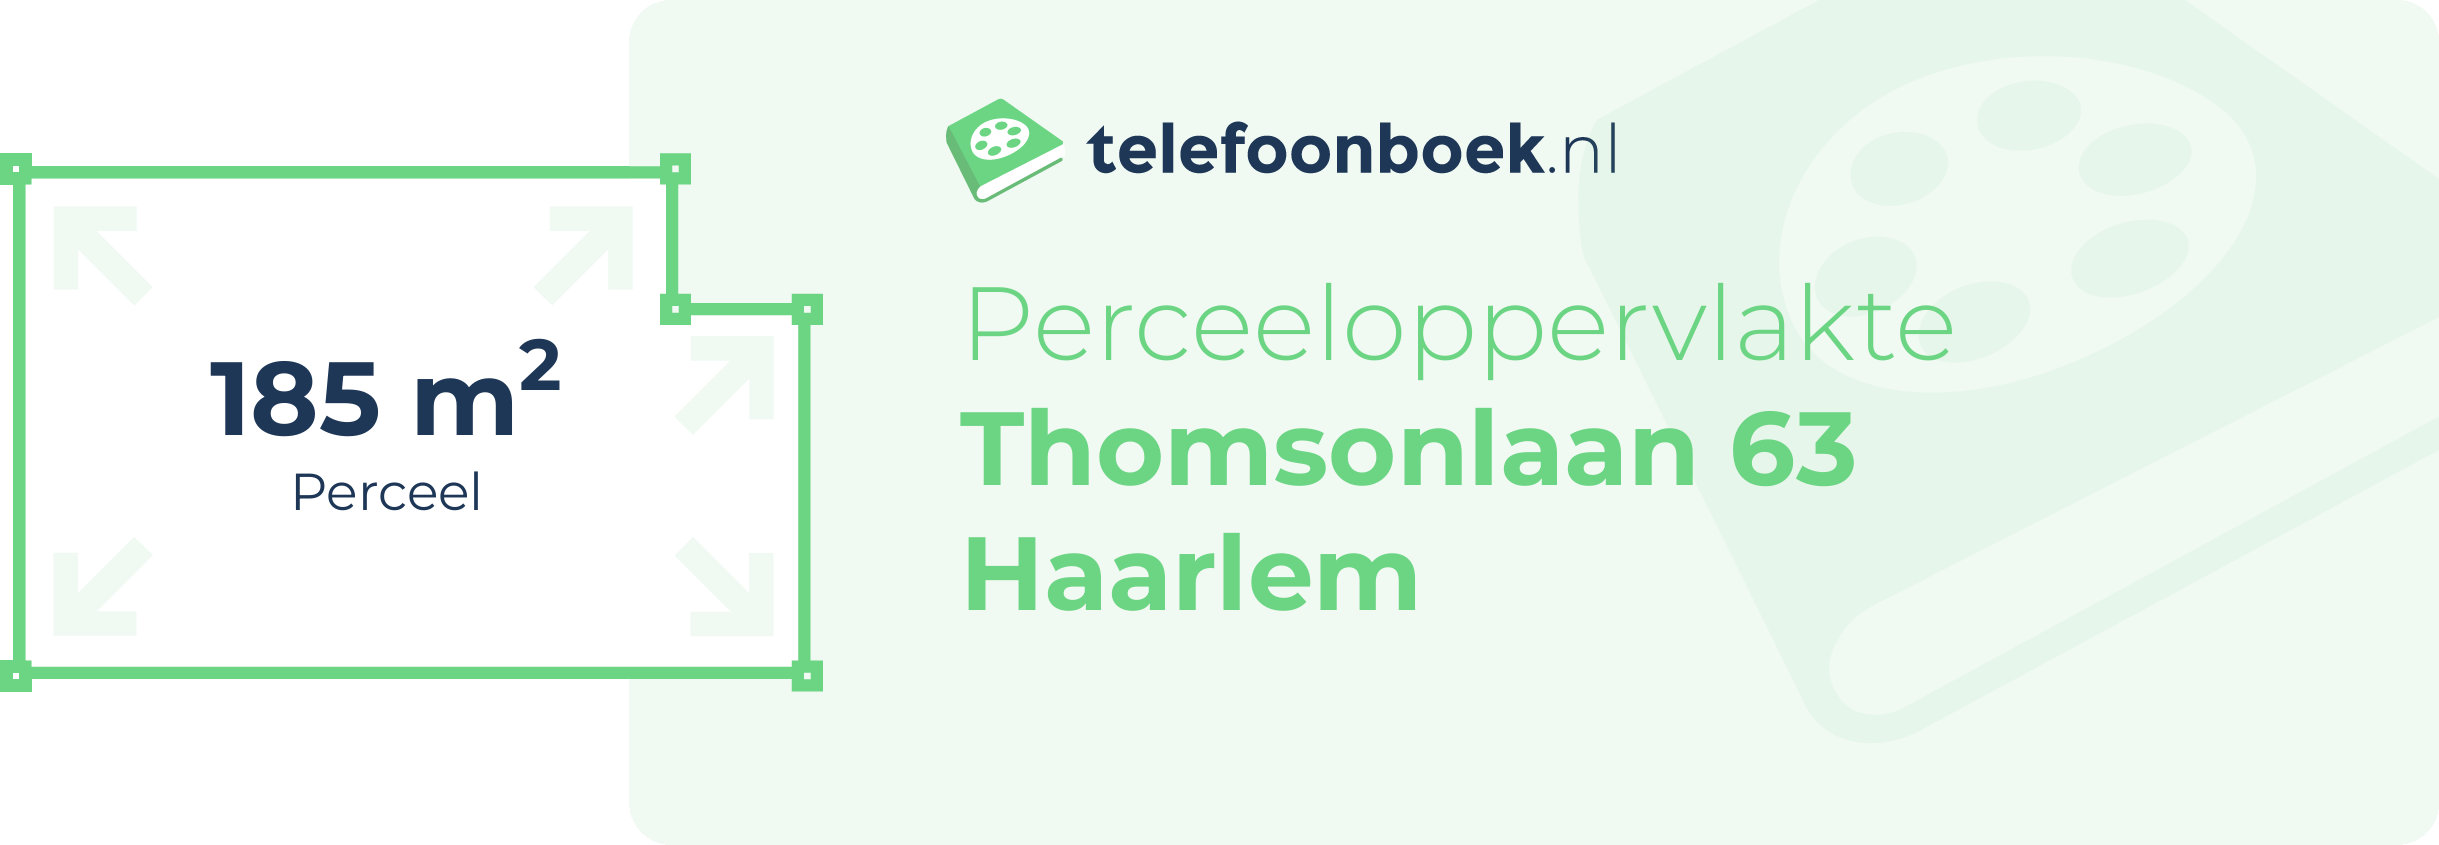 Perceeloppervlakte Thomsonlaan 63 Haarlem